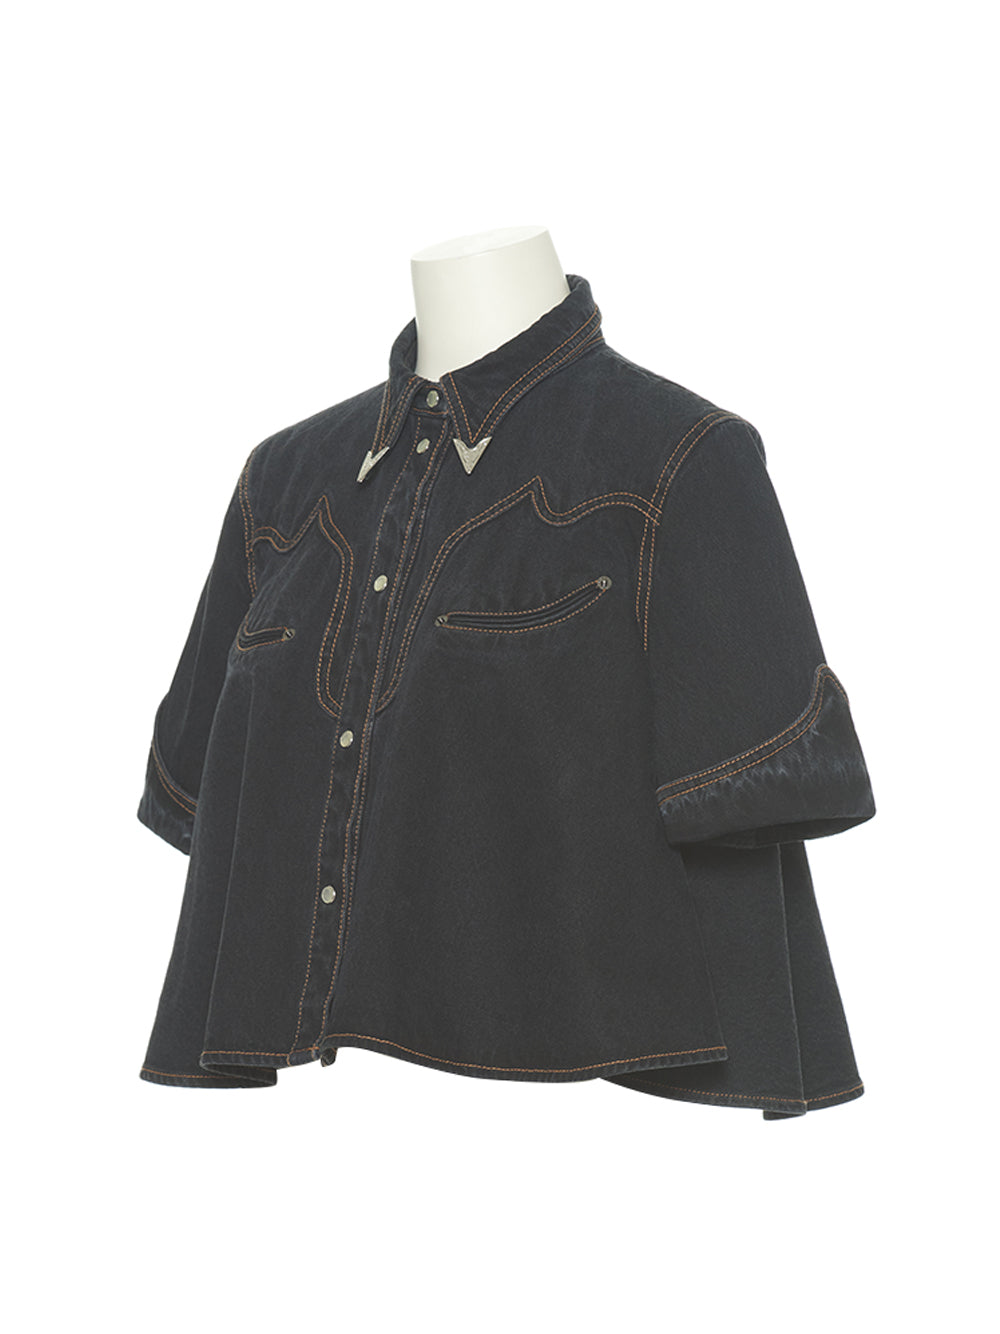 Western Pocket Crop Denim Shirt (Black)